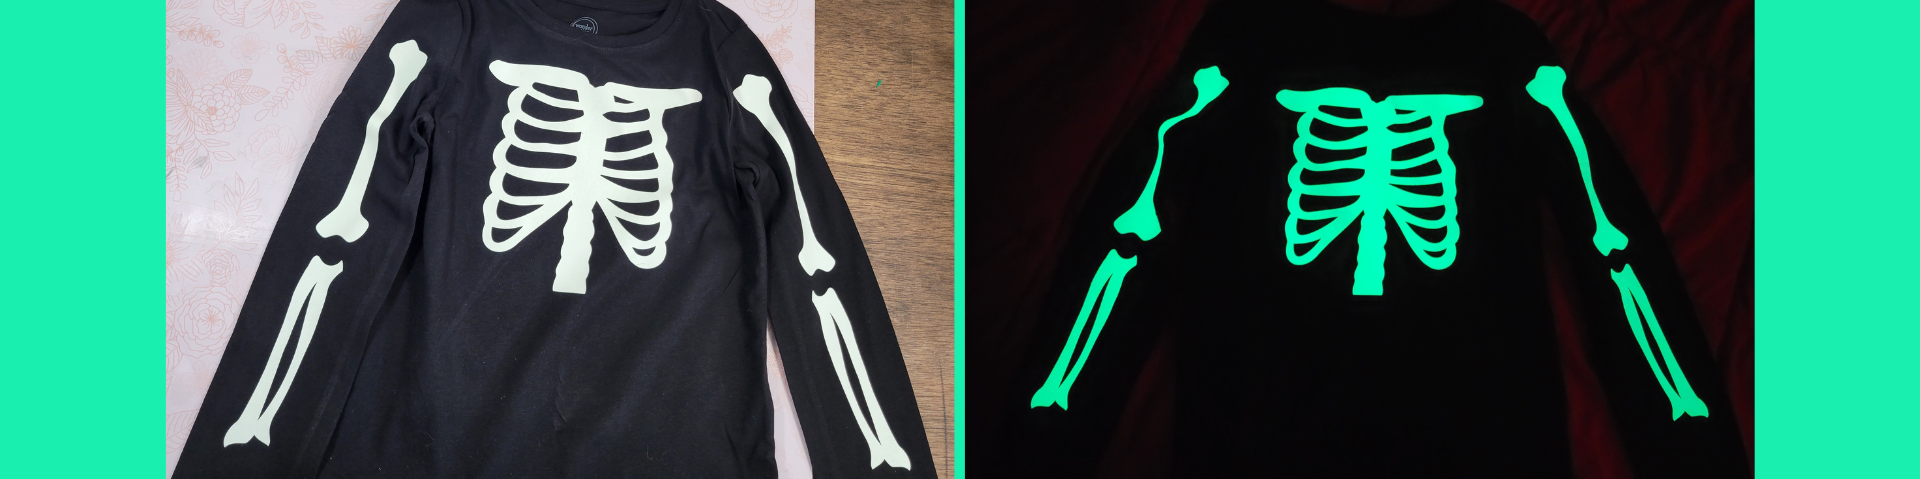 DIY Cricut Glow In The Dark Skeleton Shirt